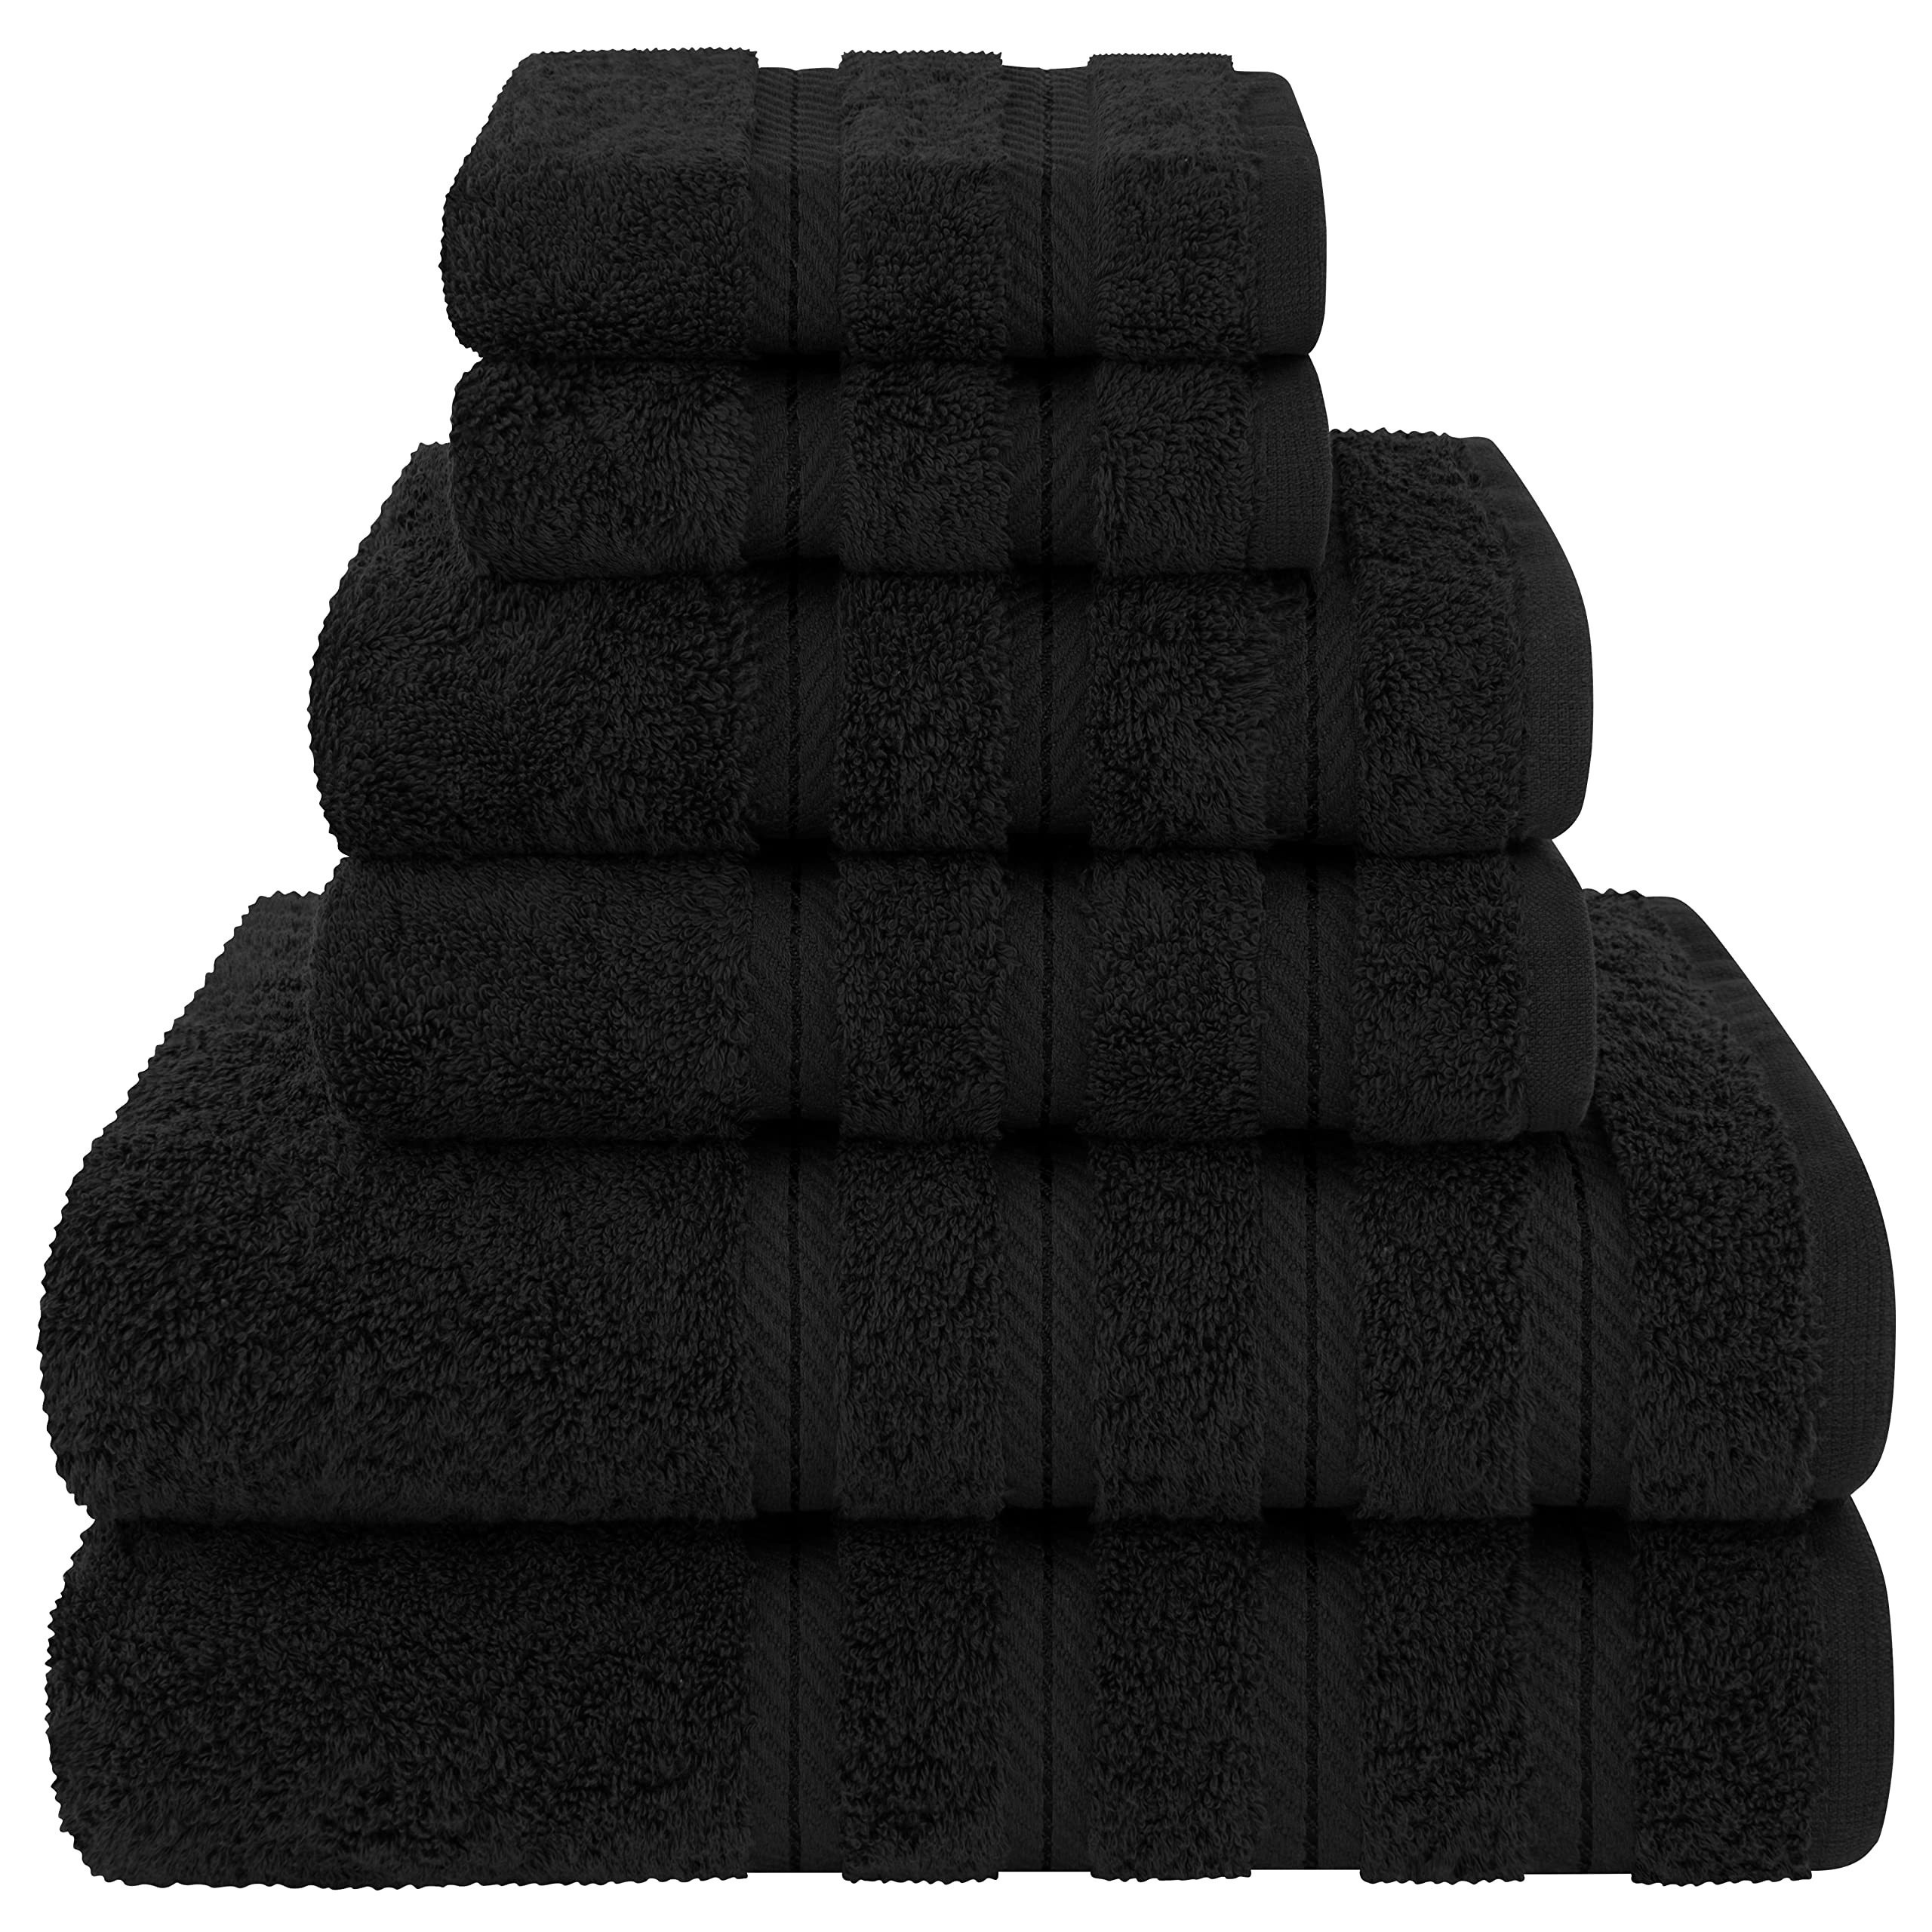 Asciugamani da bagno neri, Set 3 egdio 100% cotone portoghese, ottimo  assorbimento, 500g/m2, super soft. Asciugamani - AliExpress